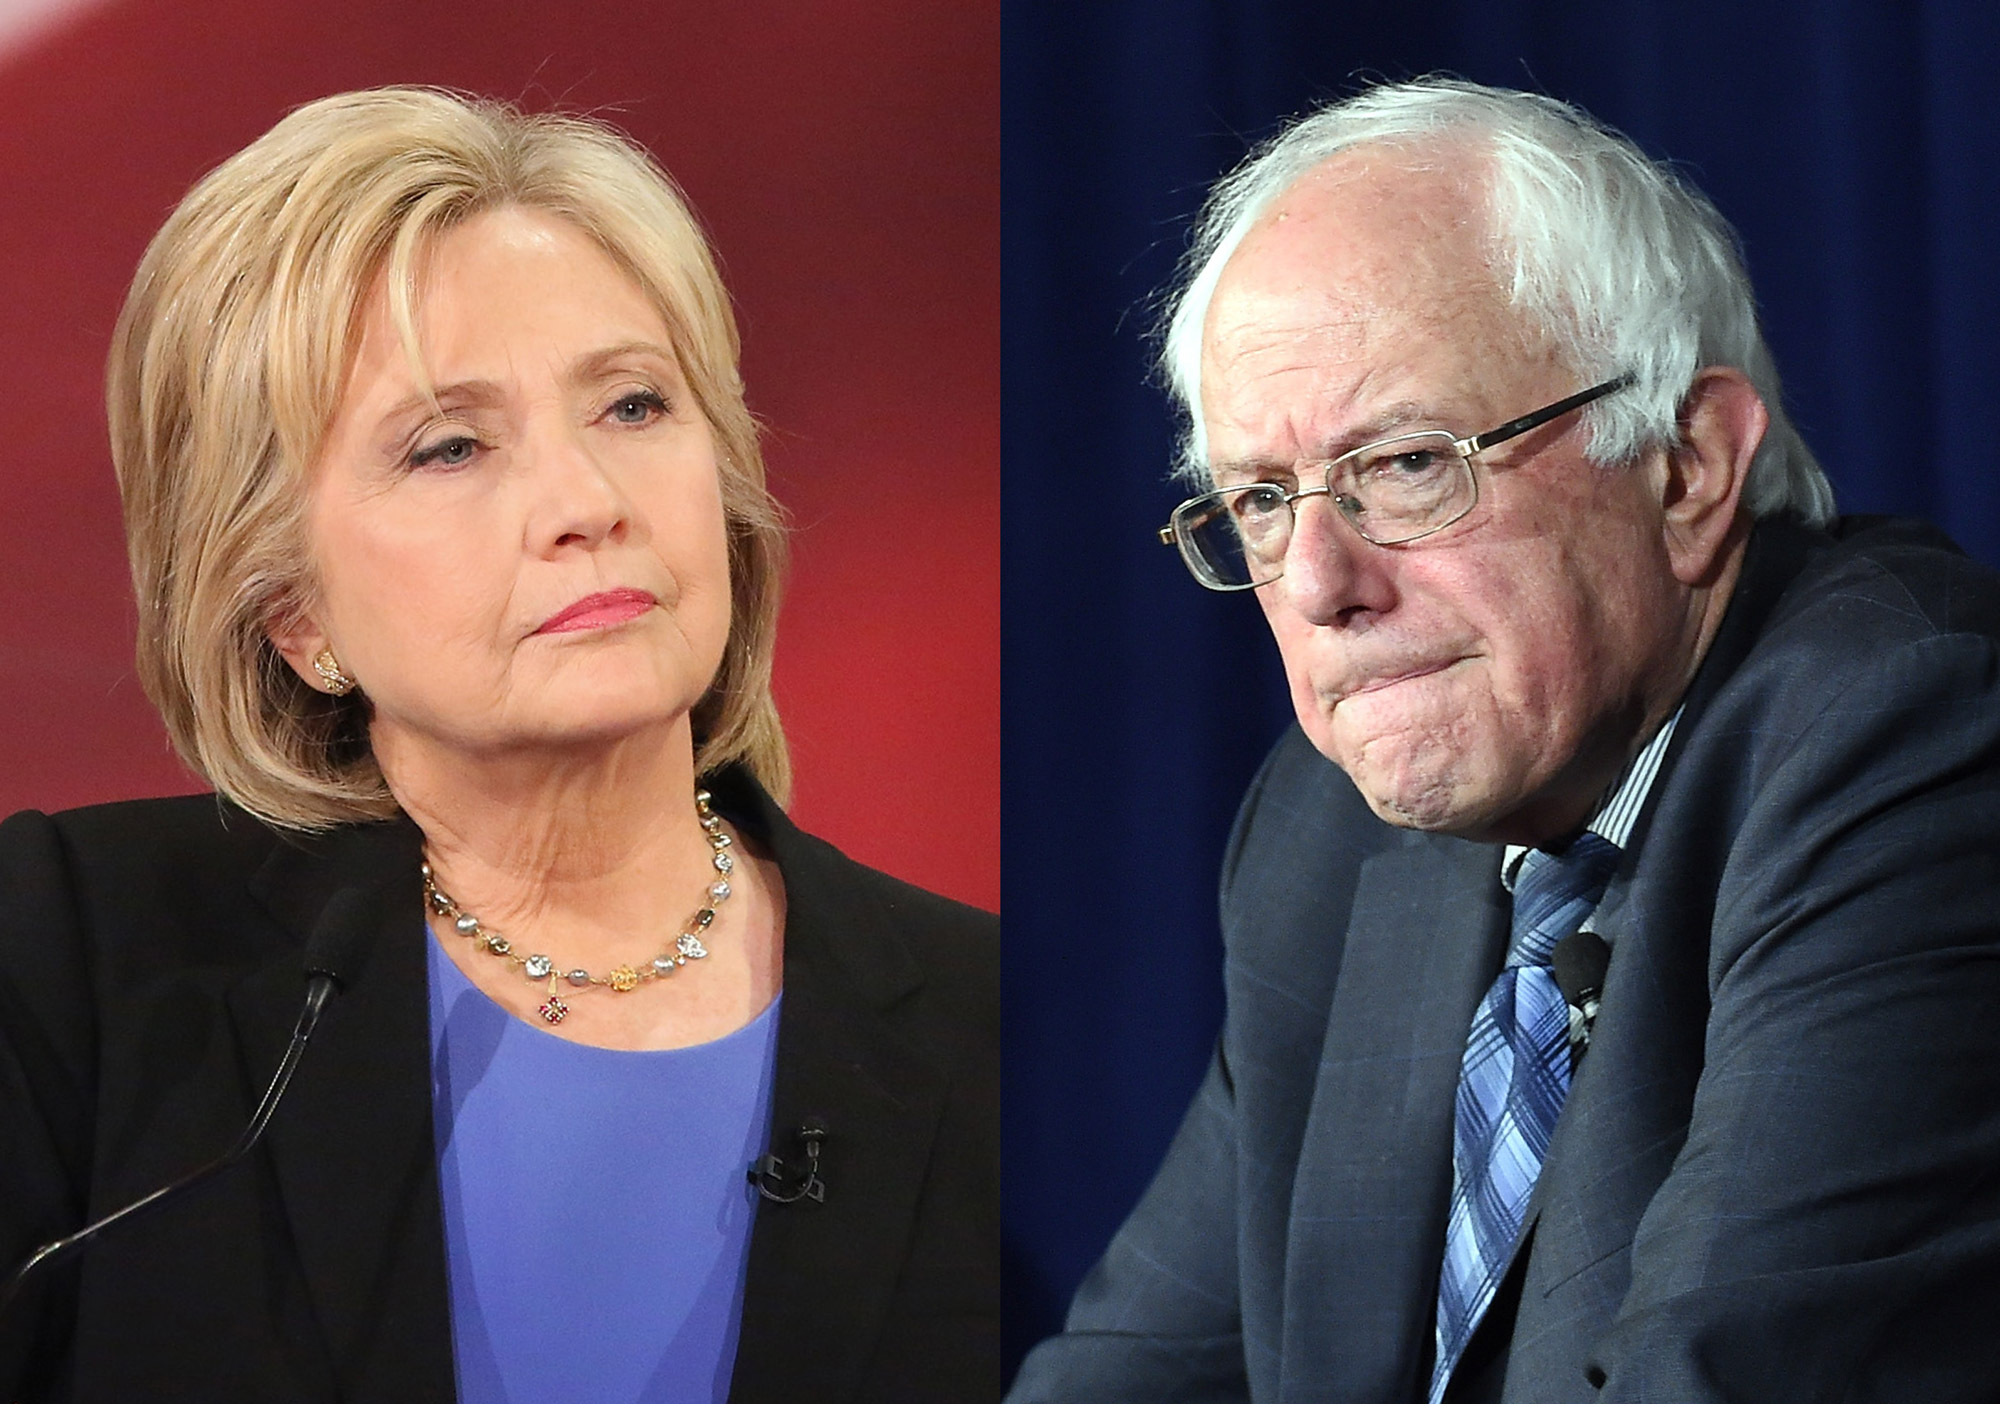 Hillary Clinton  in Charleston, SC on Jan. 17, 2016 (R); Bernie Sanders in Las Vegas, Nevada on Nov. 9, 2015. (Andrew Burton—Getty Images (R); Ethan Miller—Getty Images)